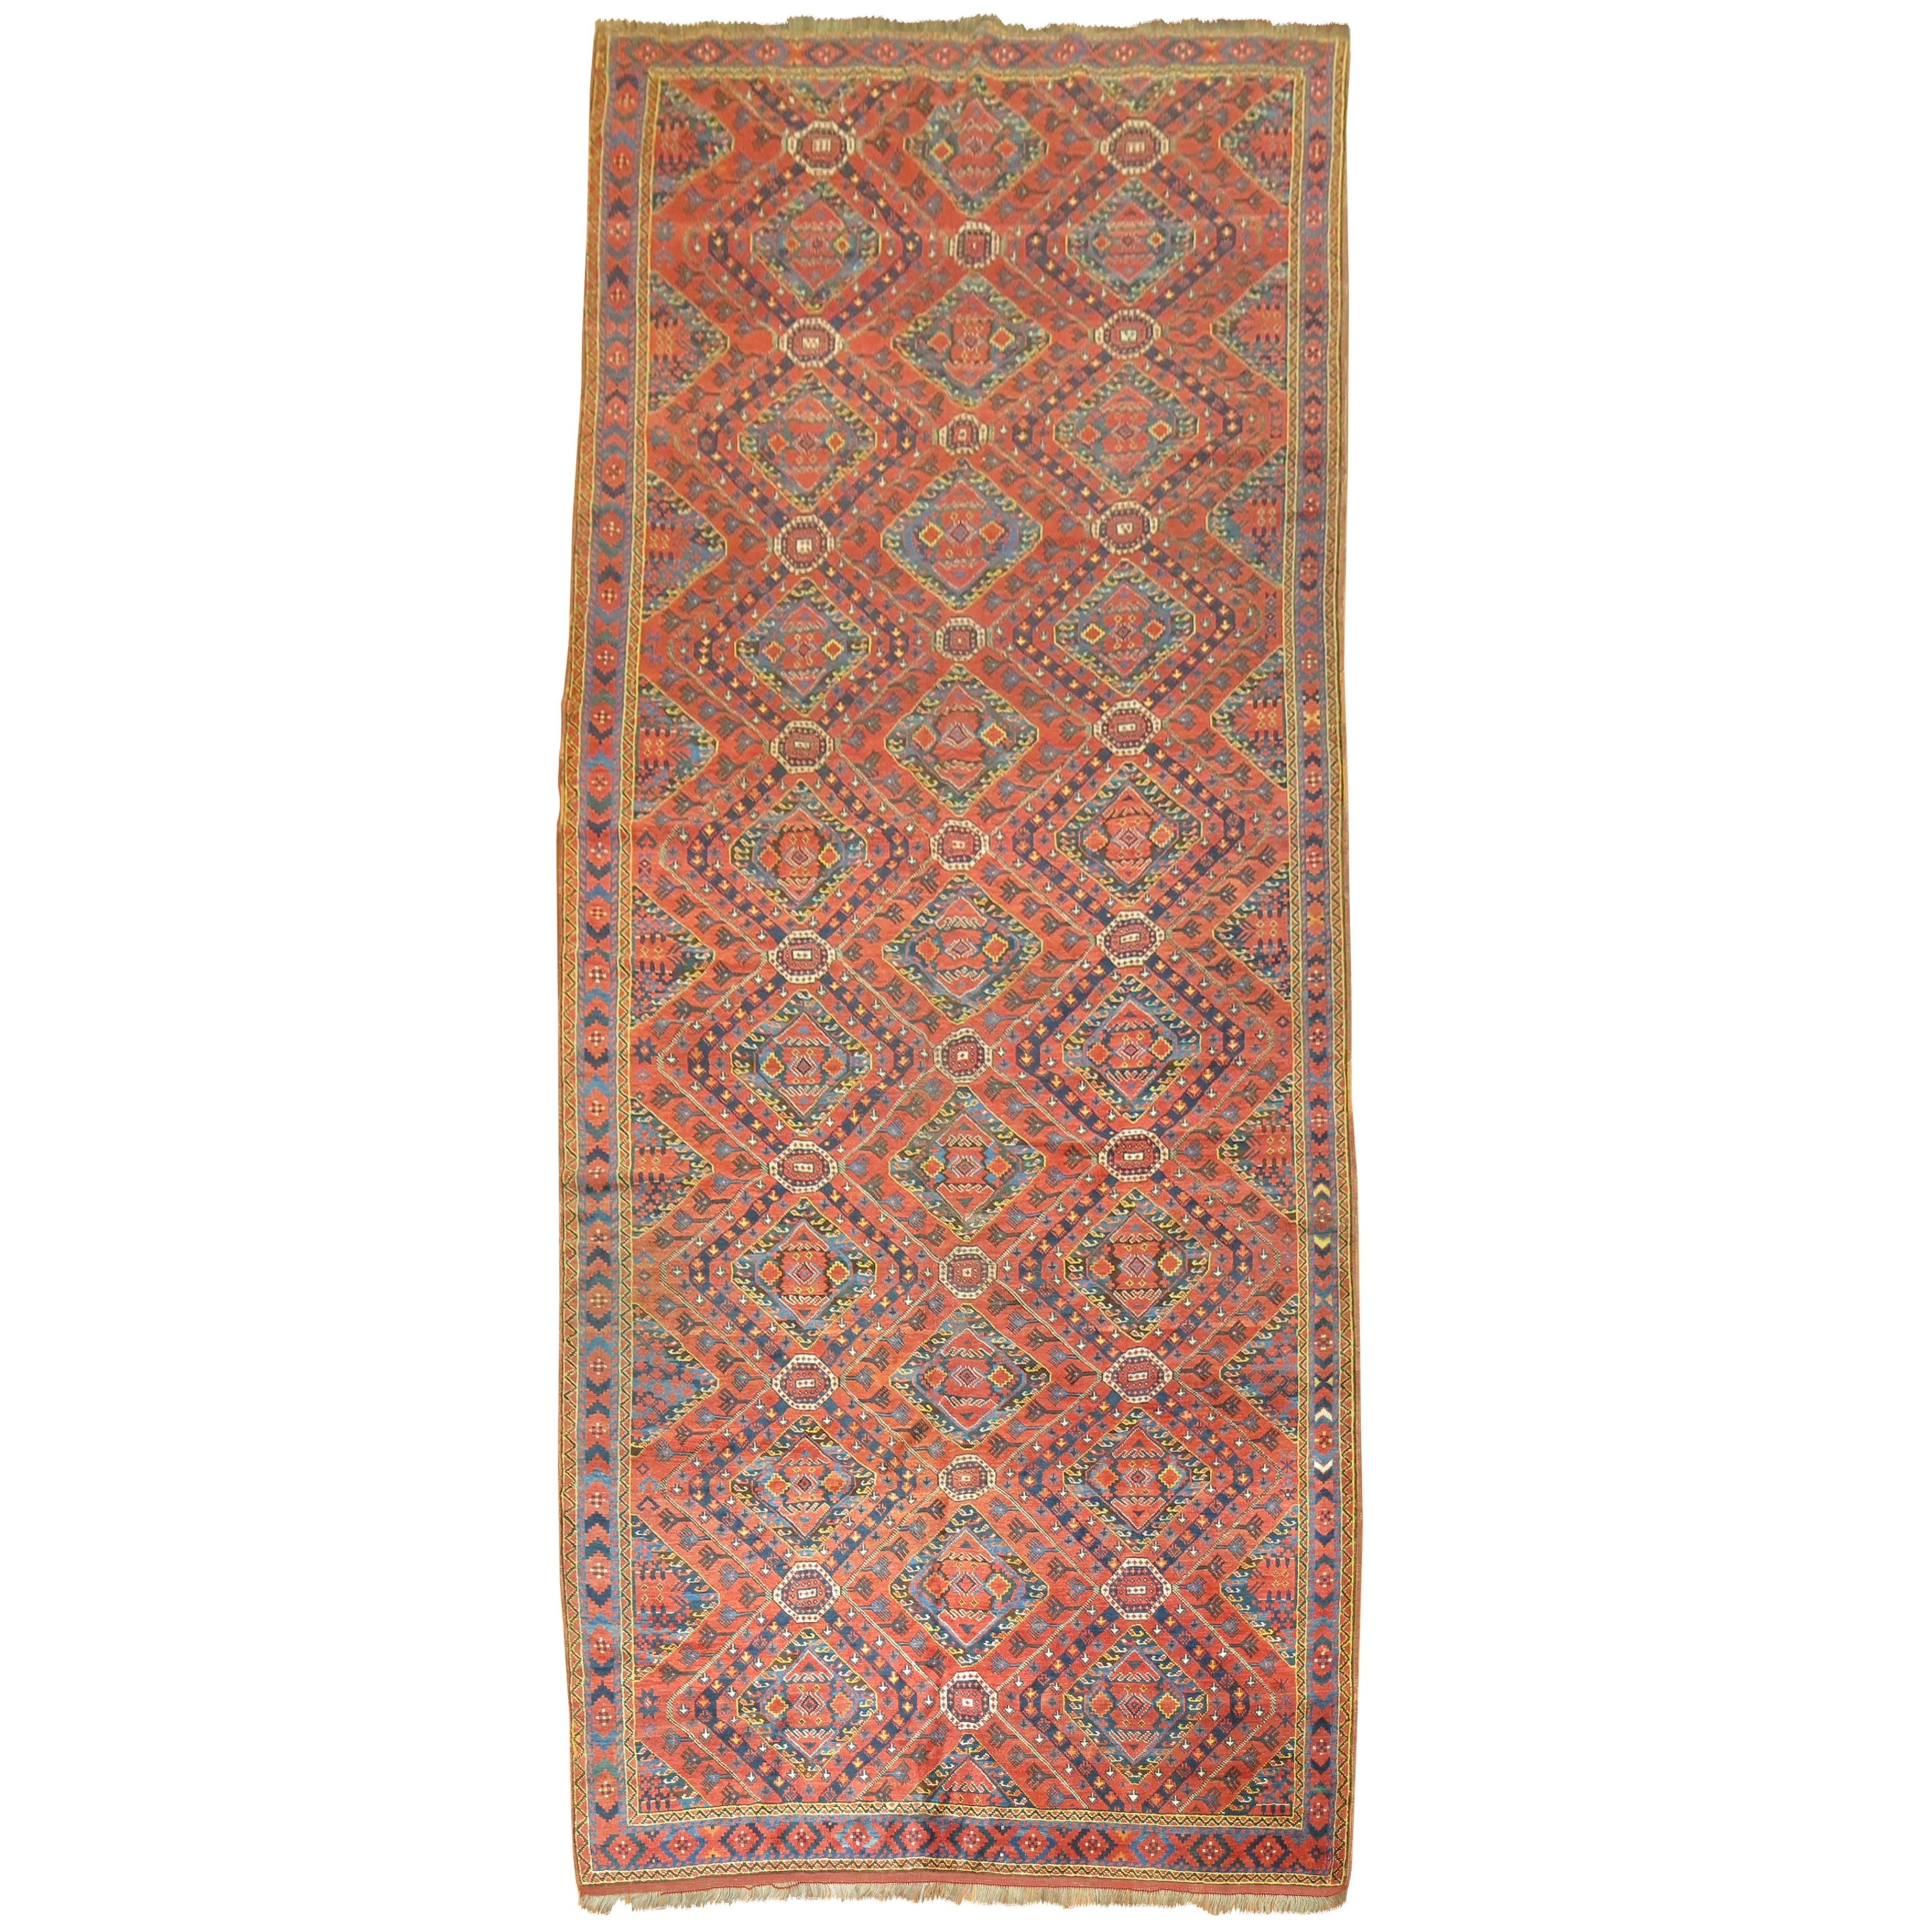 Rustic Gallery SizeAntique Beshir Carpet For Sale